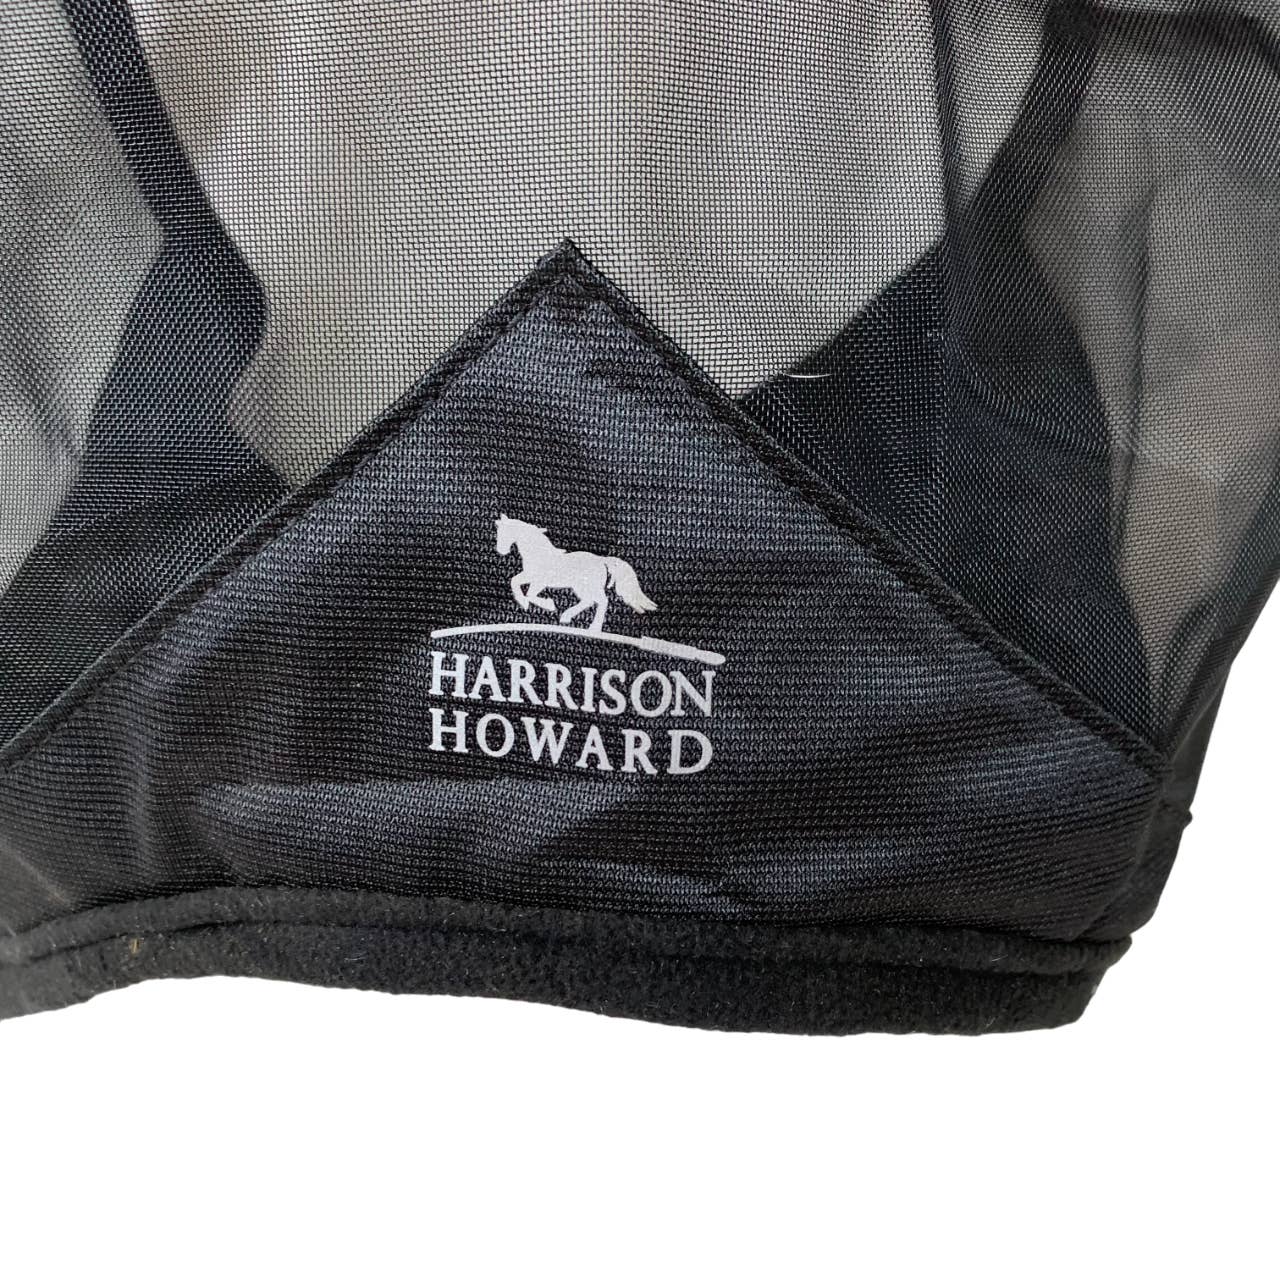 Harrison Howard 'Super Comfort' Fly Mask in Black - Extra Full